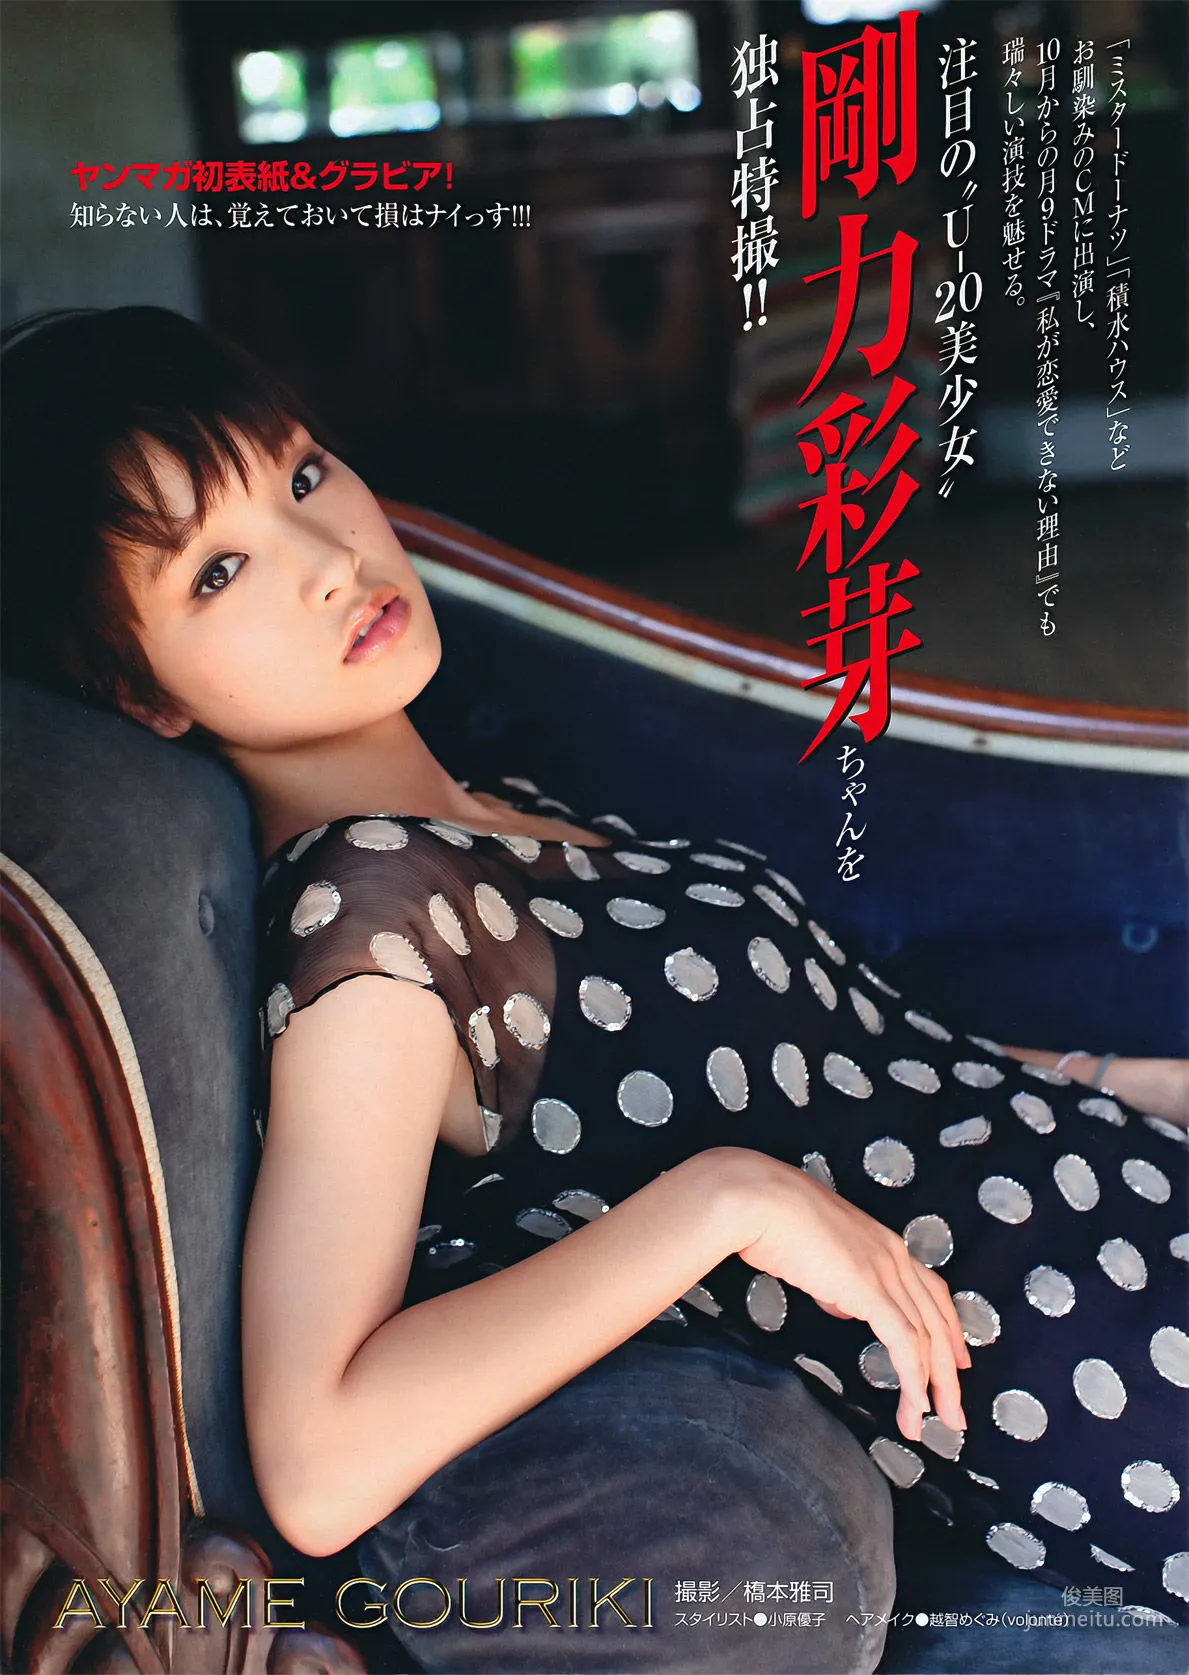 [Young Magazine] 剛力彩芽 Ayame Gouriki 2011年No.46 写真杂志2